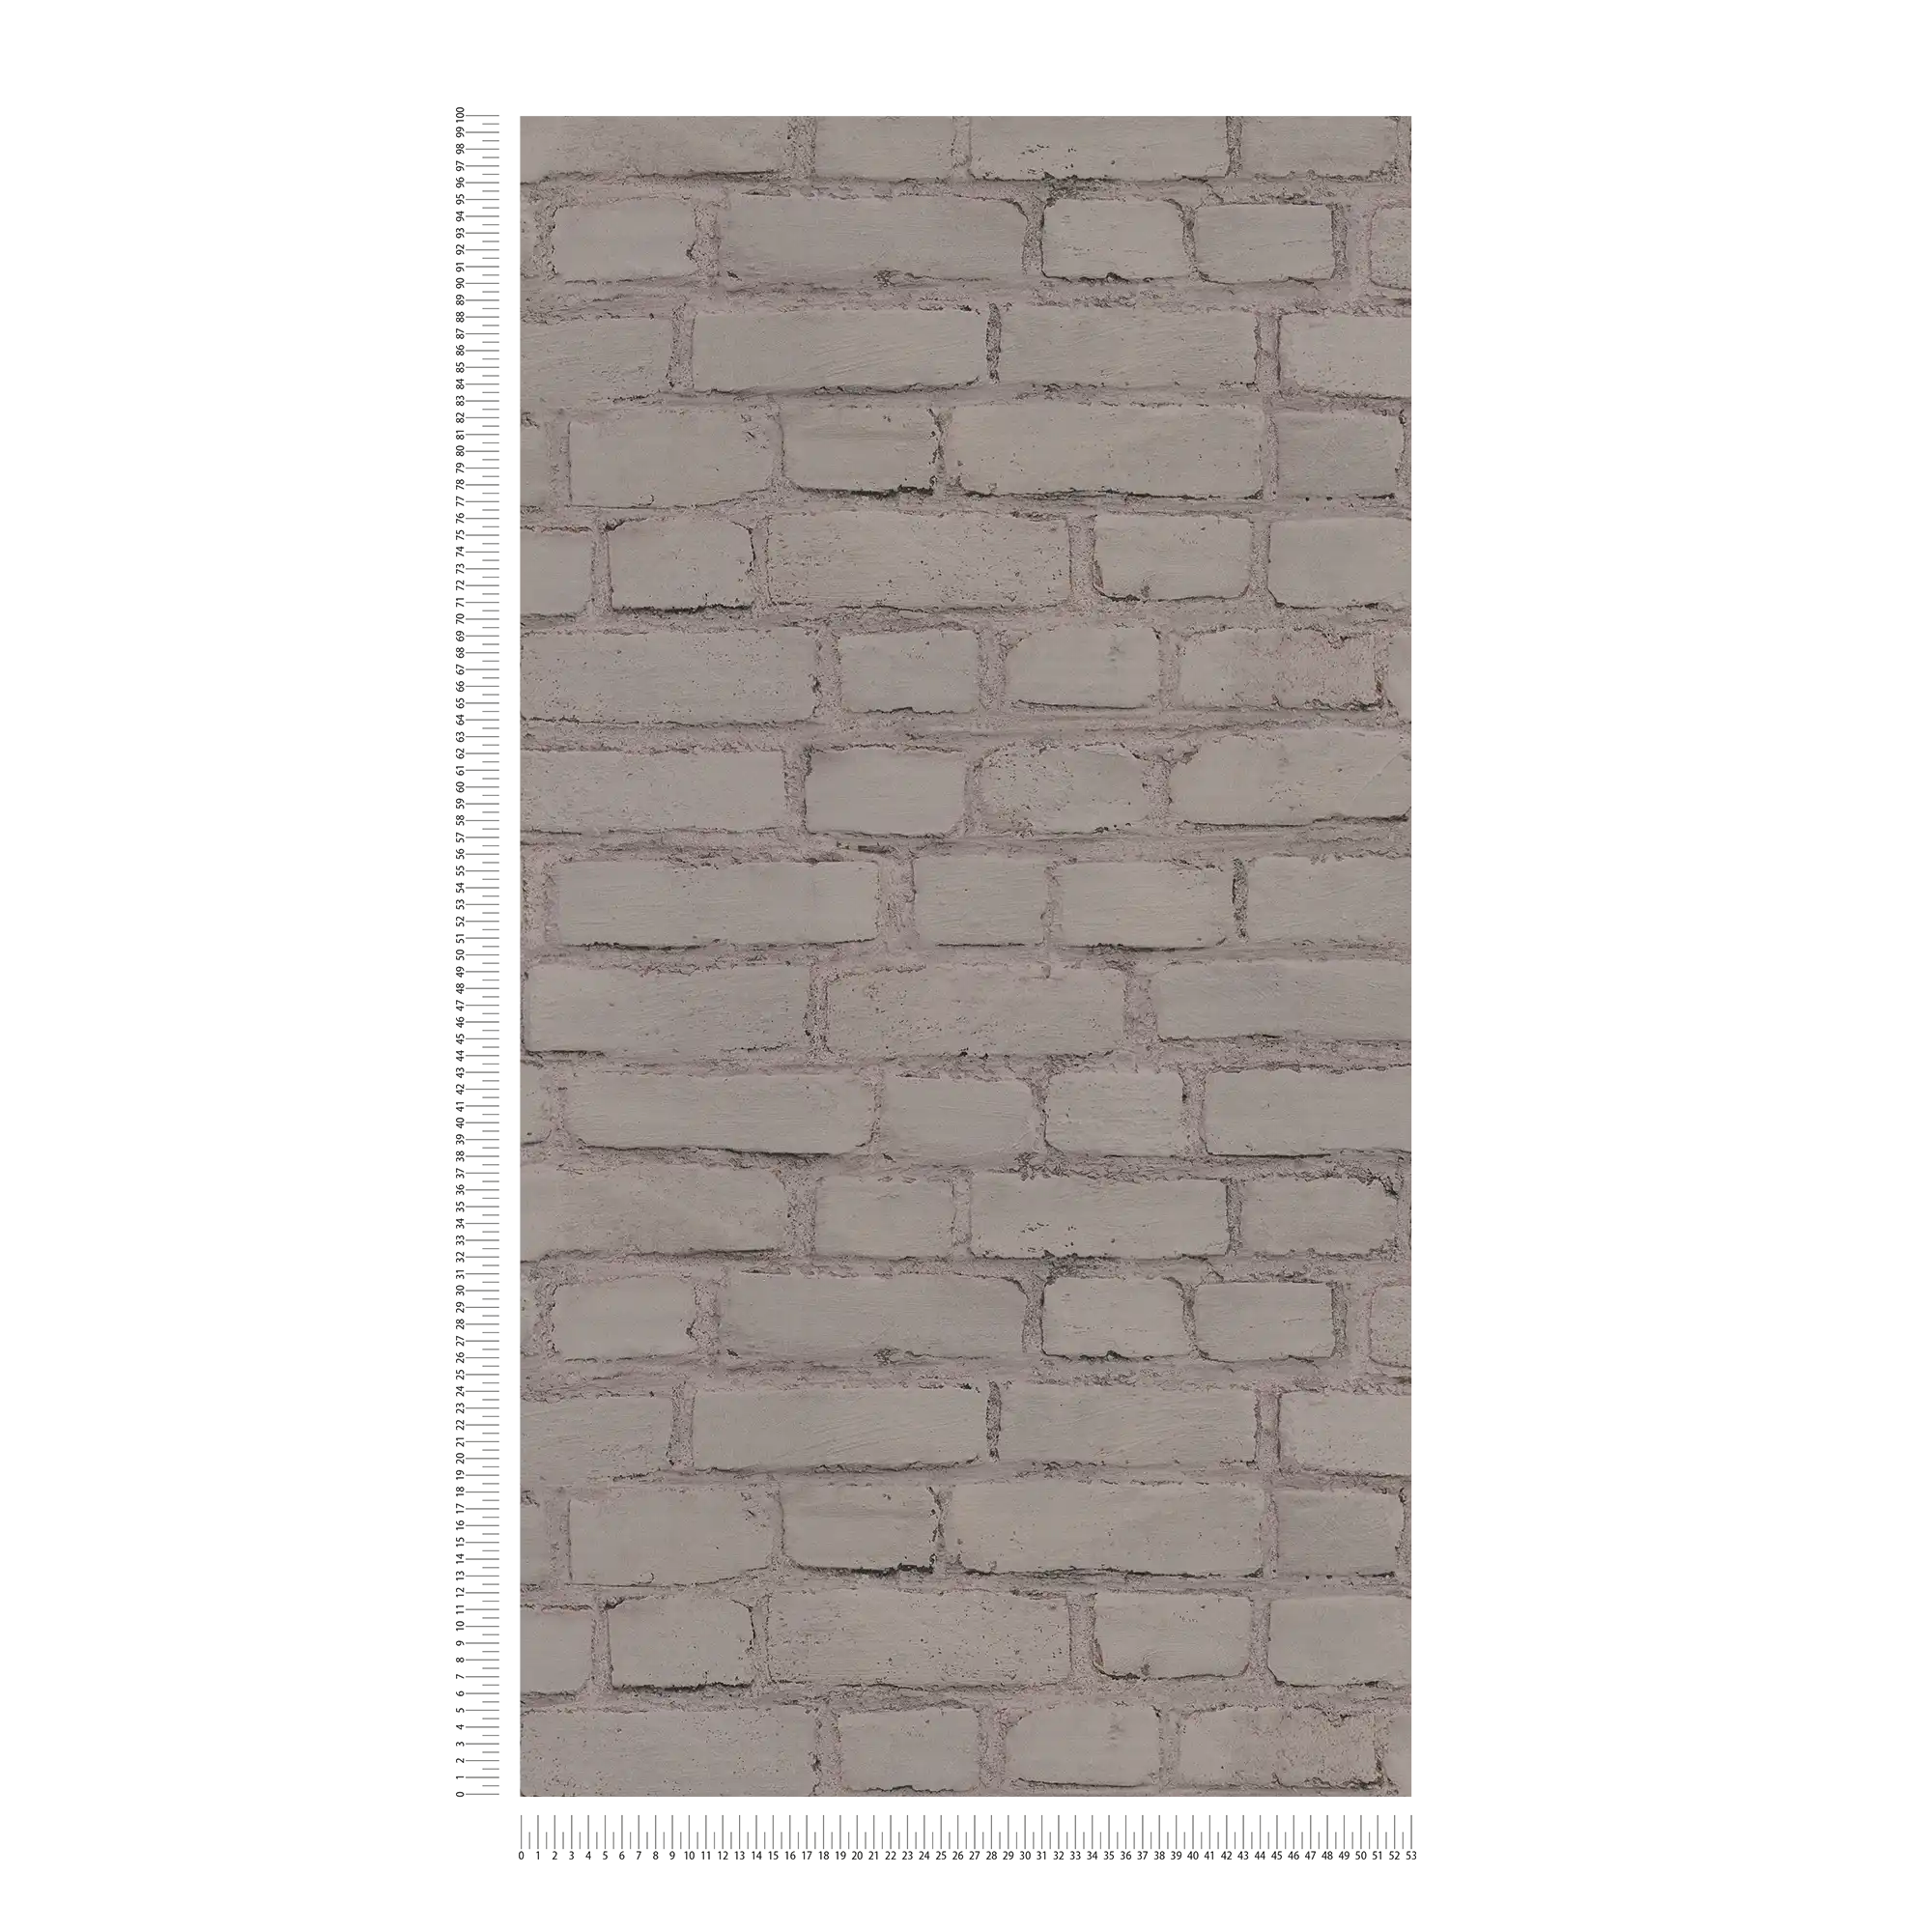             Carta da parati in pietra effetto clinker - grigio, tortora
        